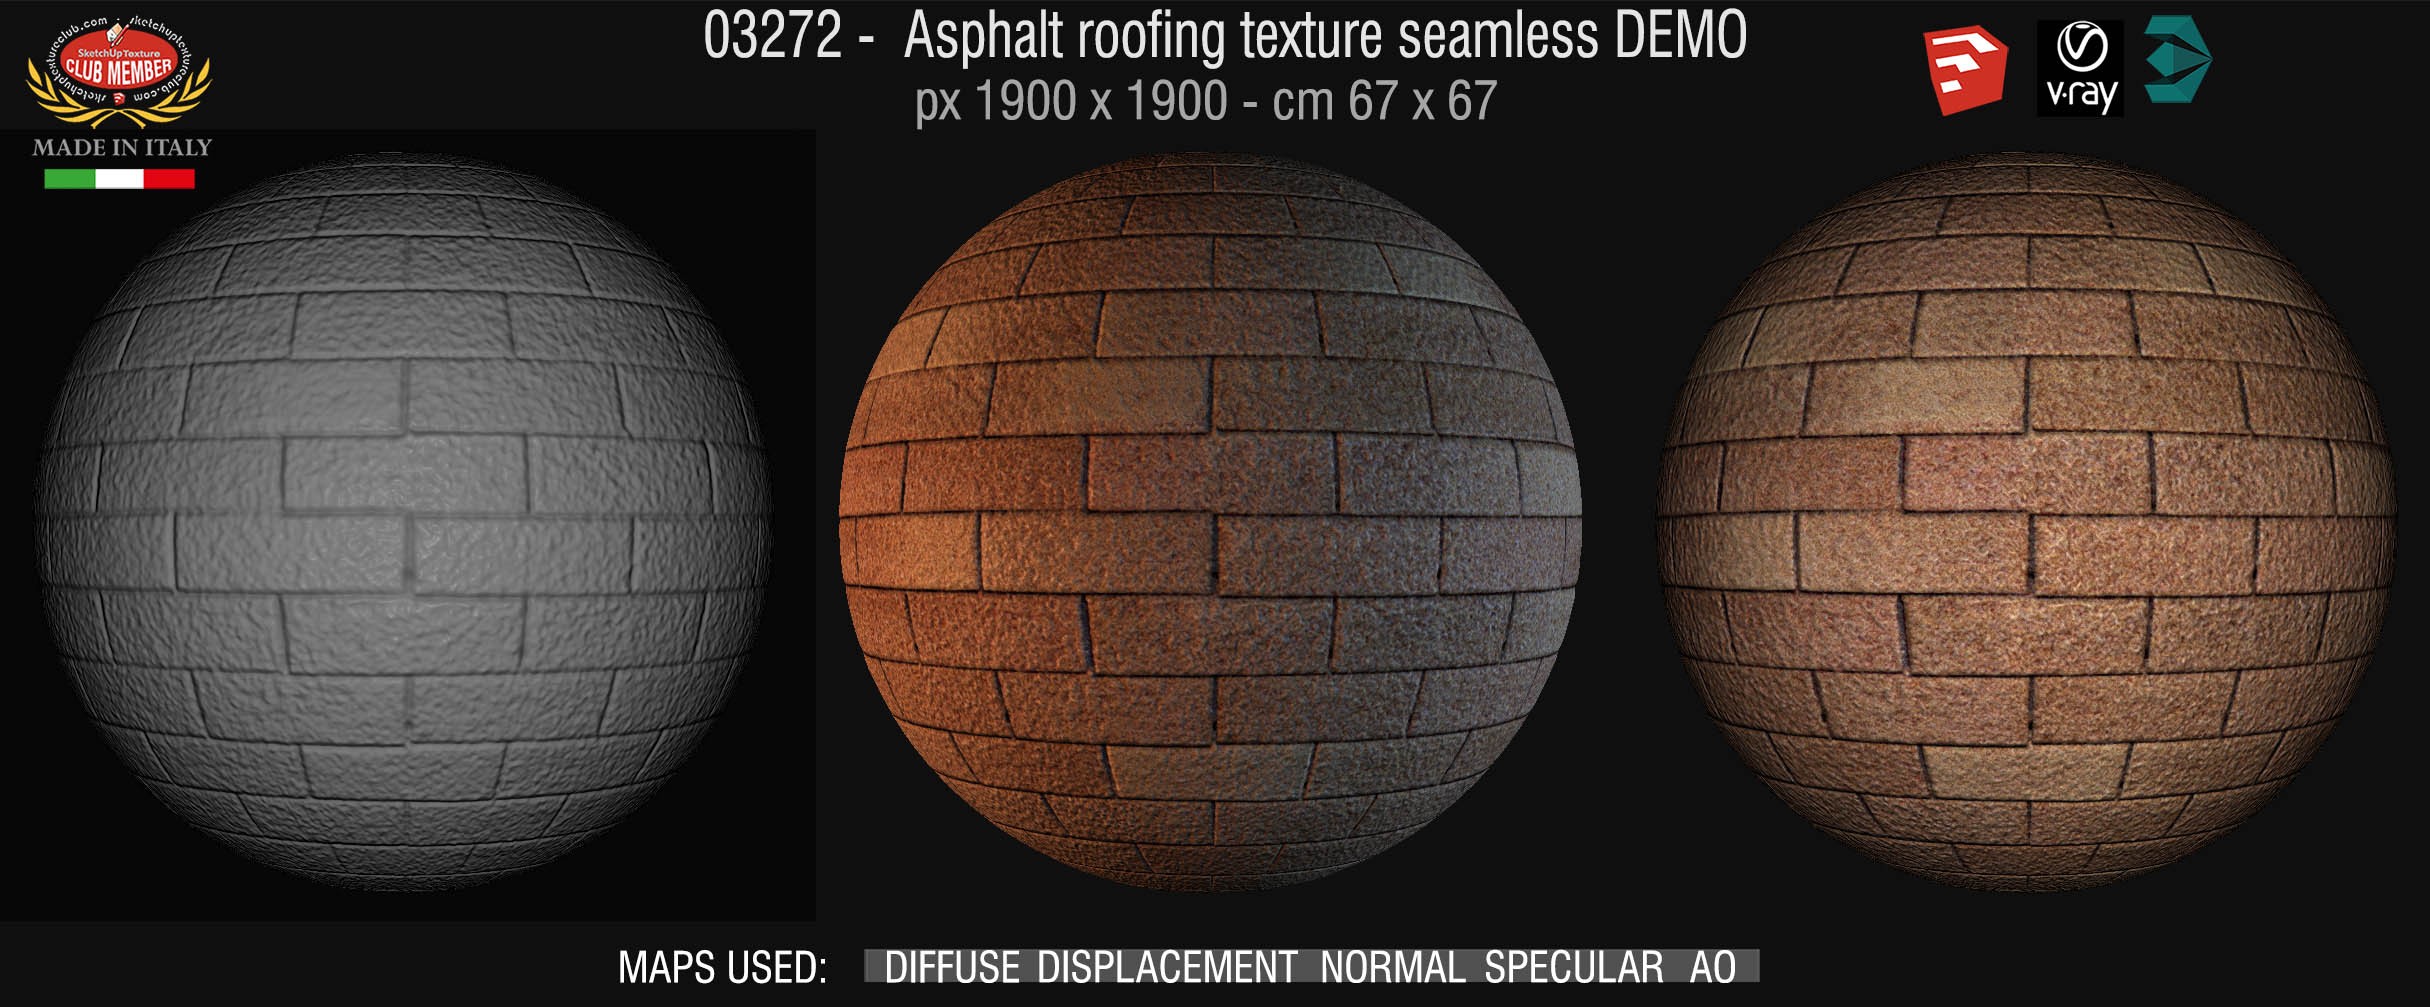 03272 Asphalt roofing texture + maps DEMO